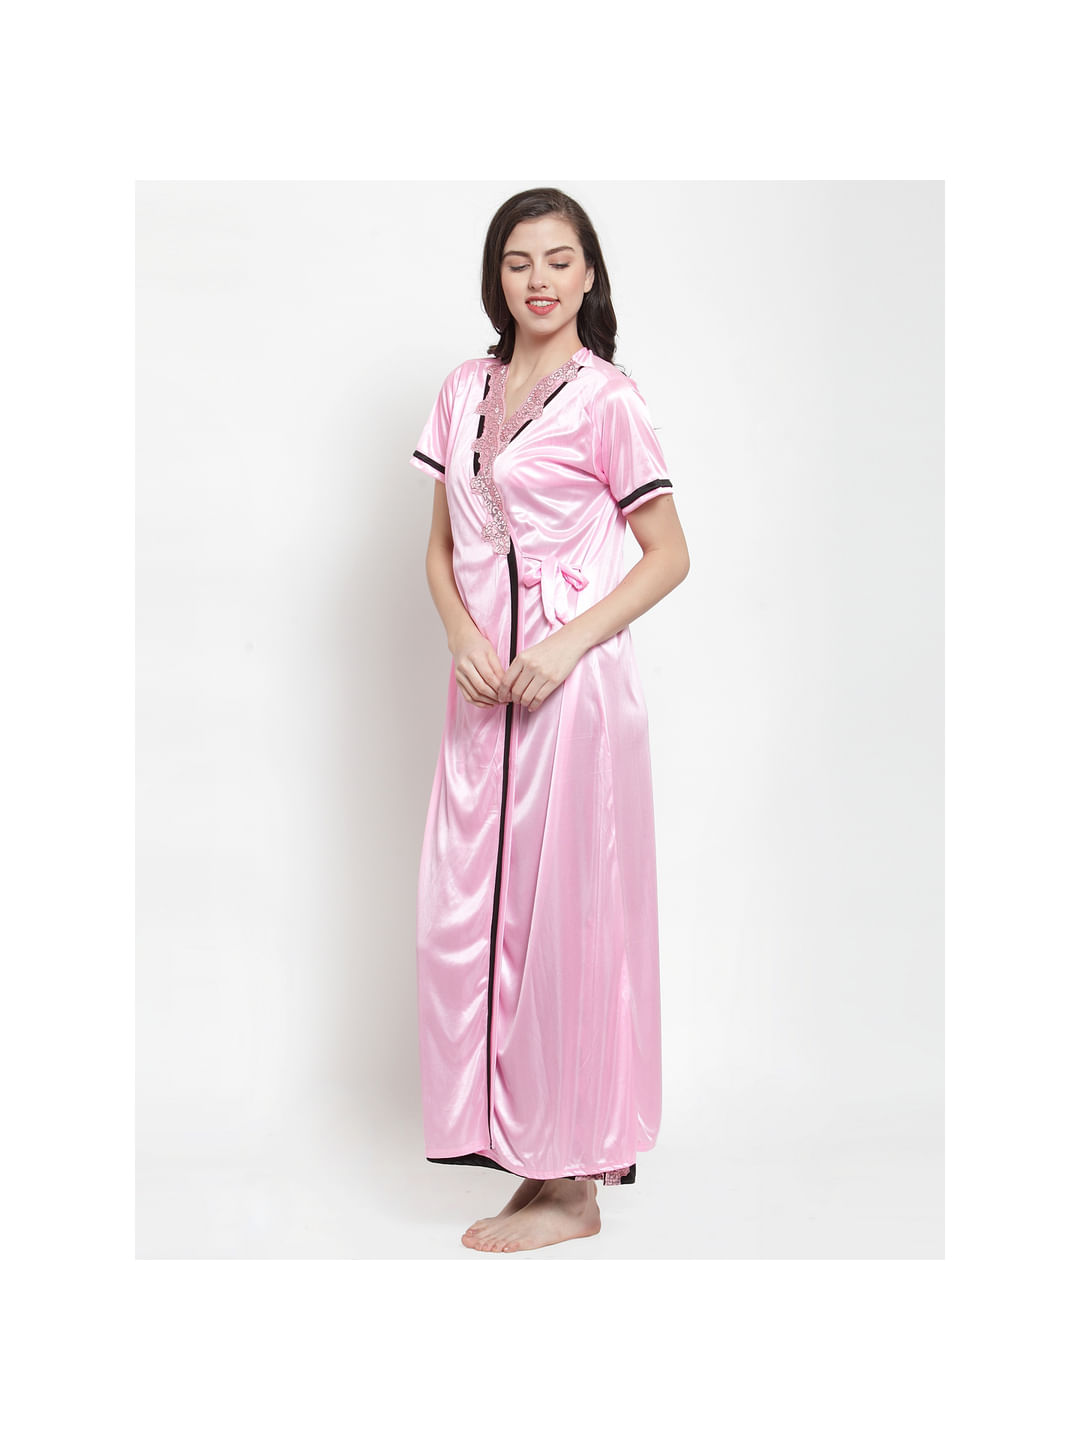 Baby Pink-Black Satin Solid Robe Set (Free Size)